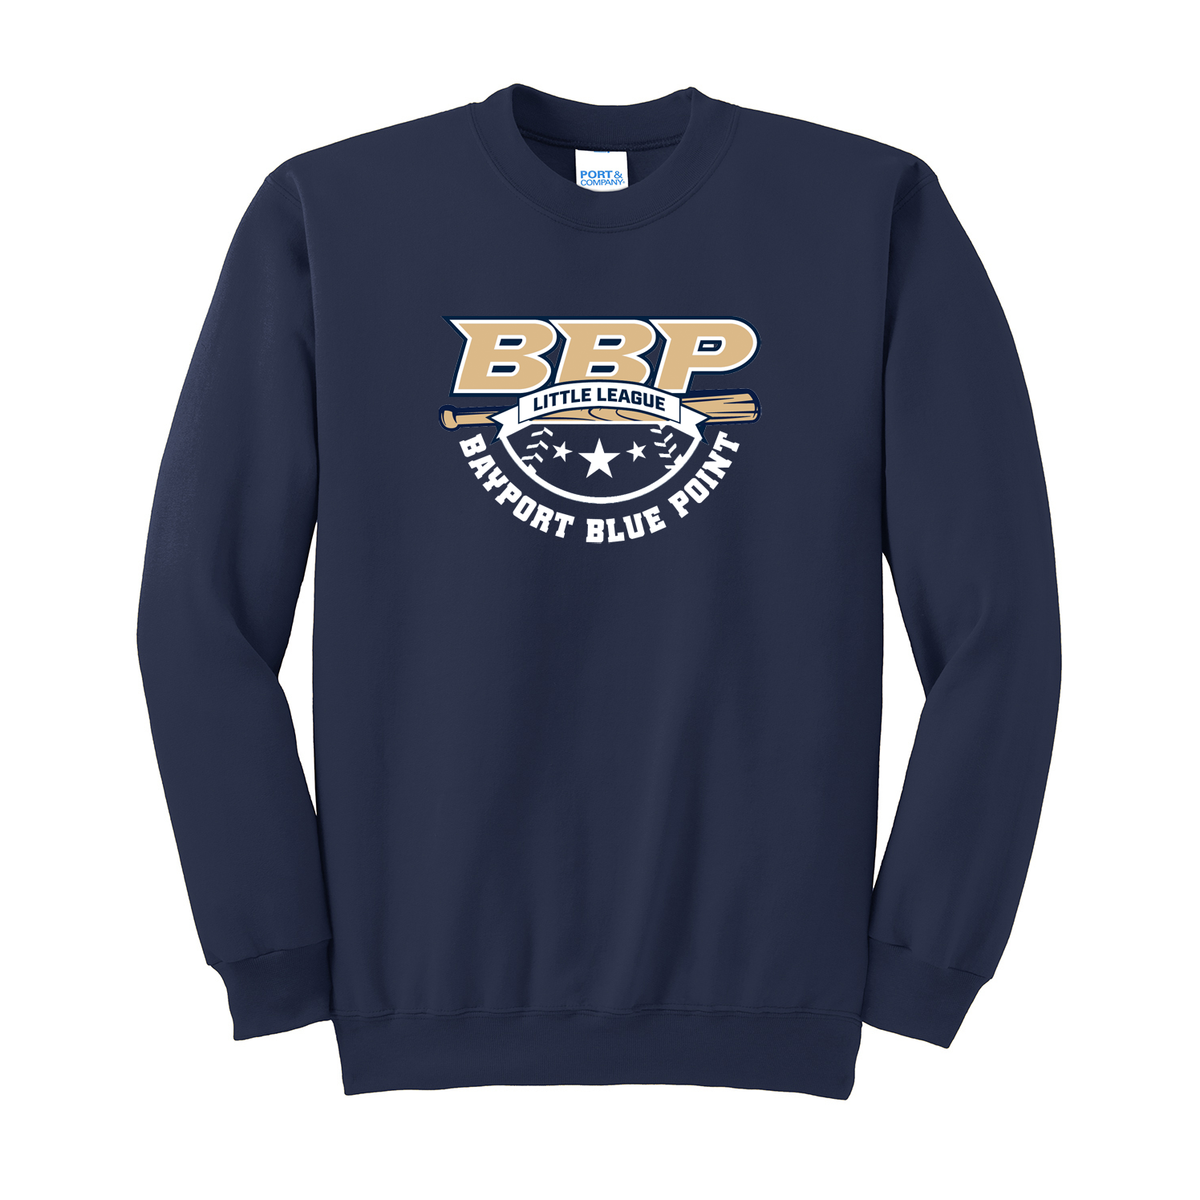 BBP Little League Crew Neck Sweater